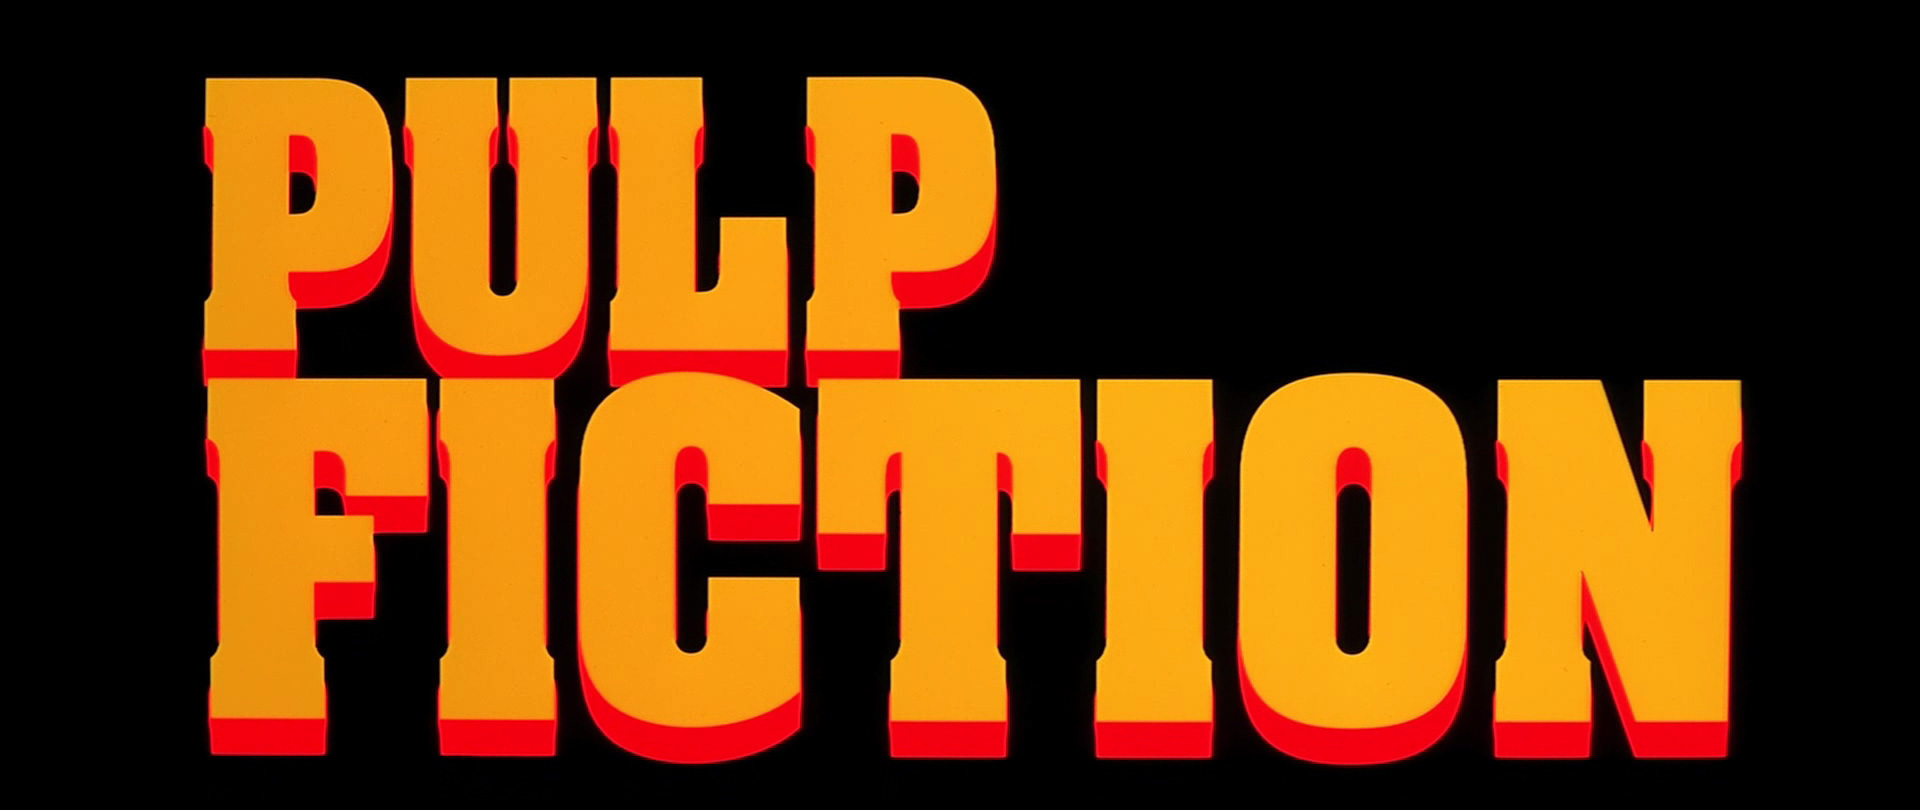 Pulp-Fiction-pulp-fiction-13128916-1920-810.jpg